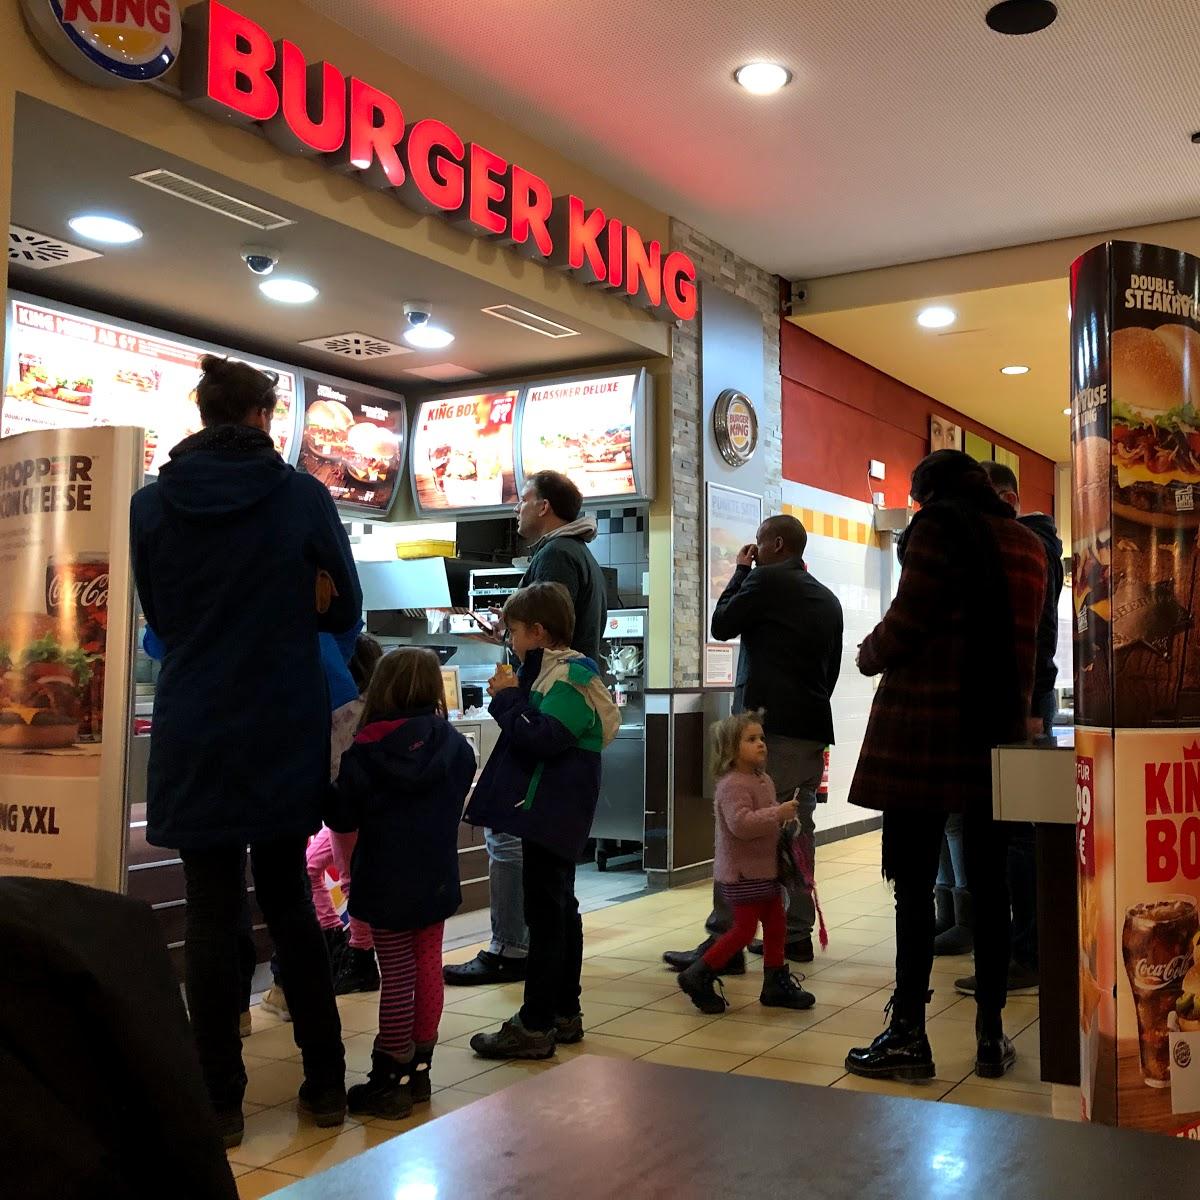 Restaurant "Burger King" in  Lorsch